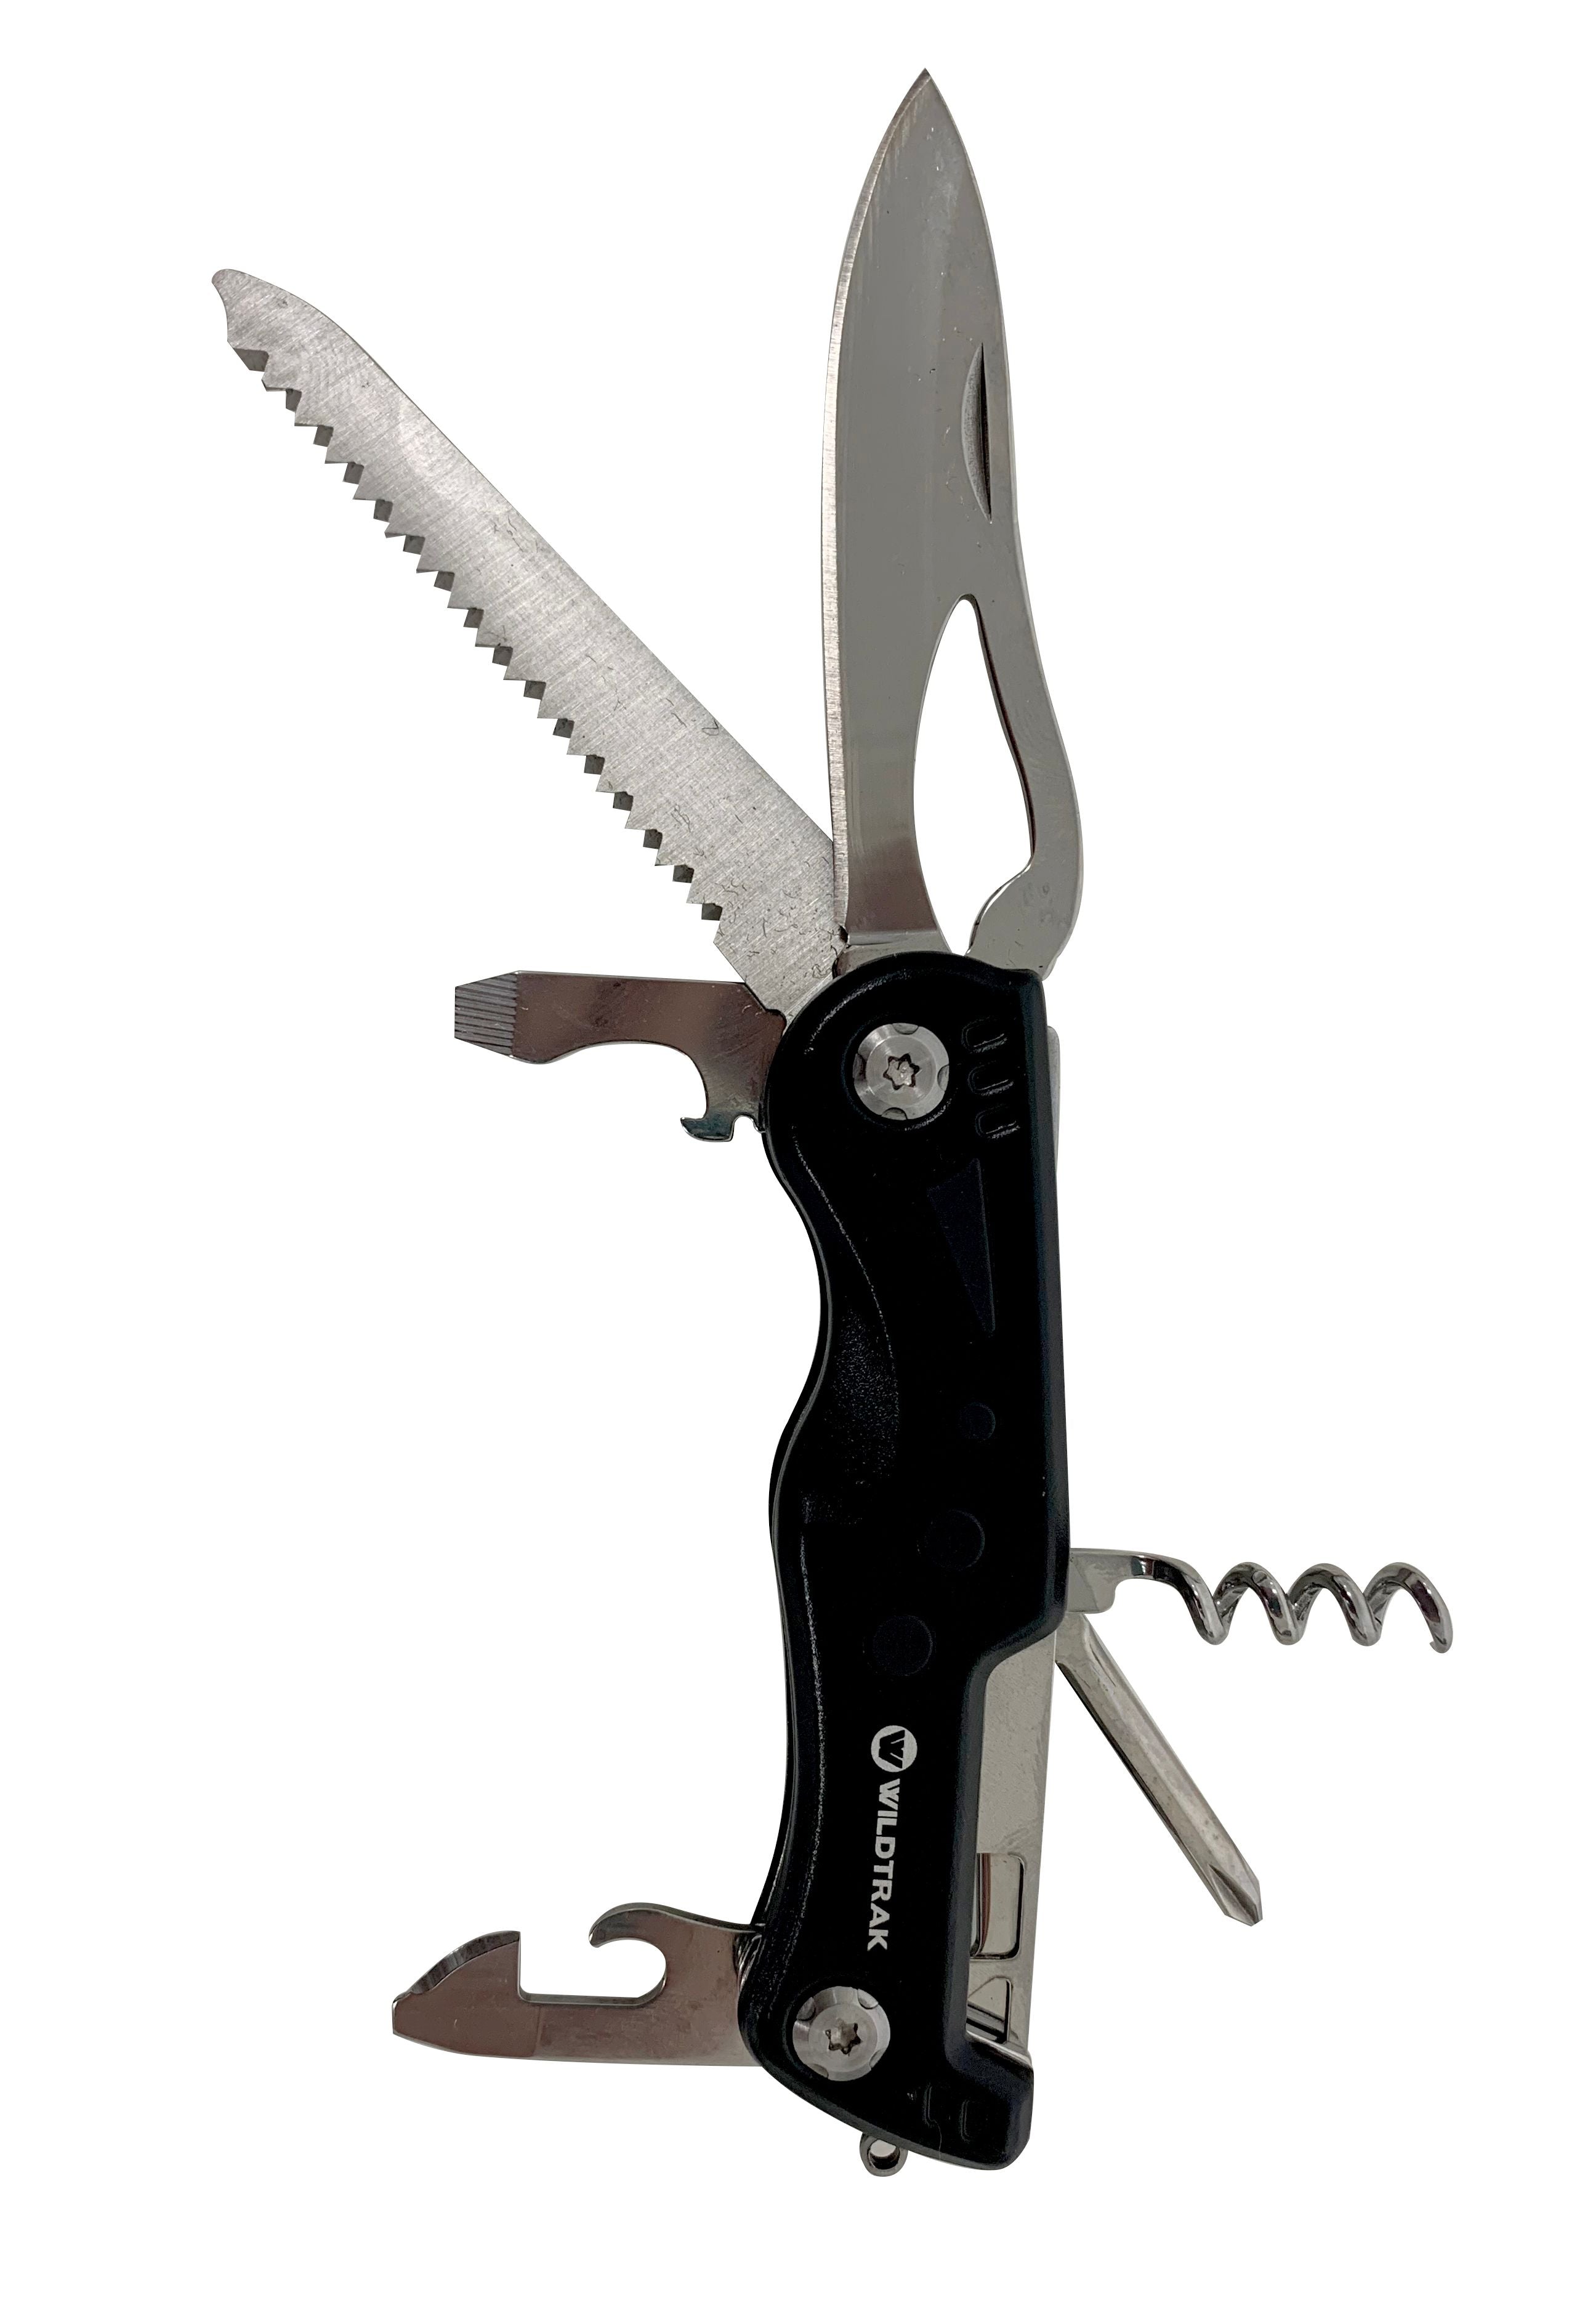 Wildtrak 9 in 1 Multi Tool with Pocket Knife